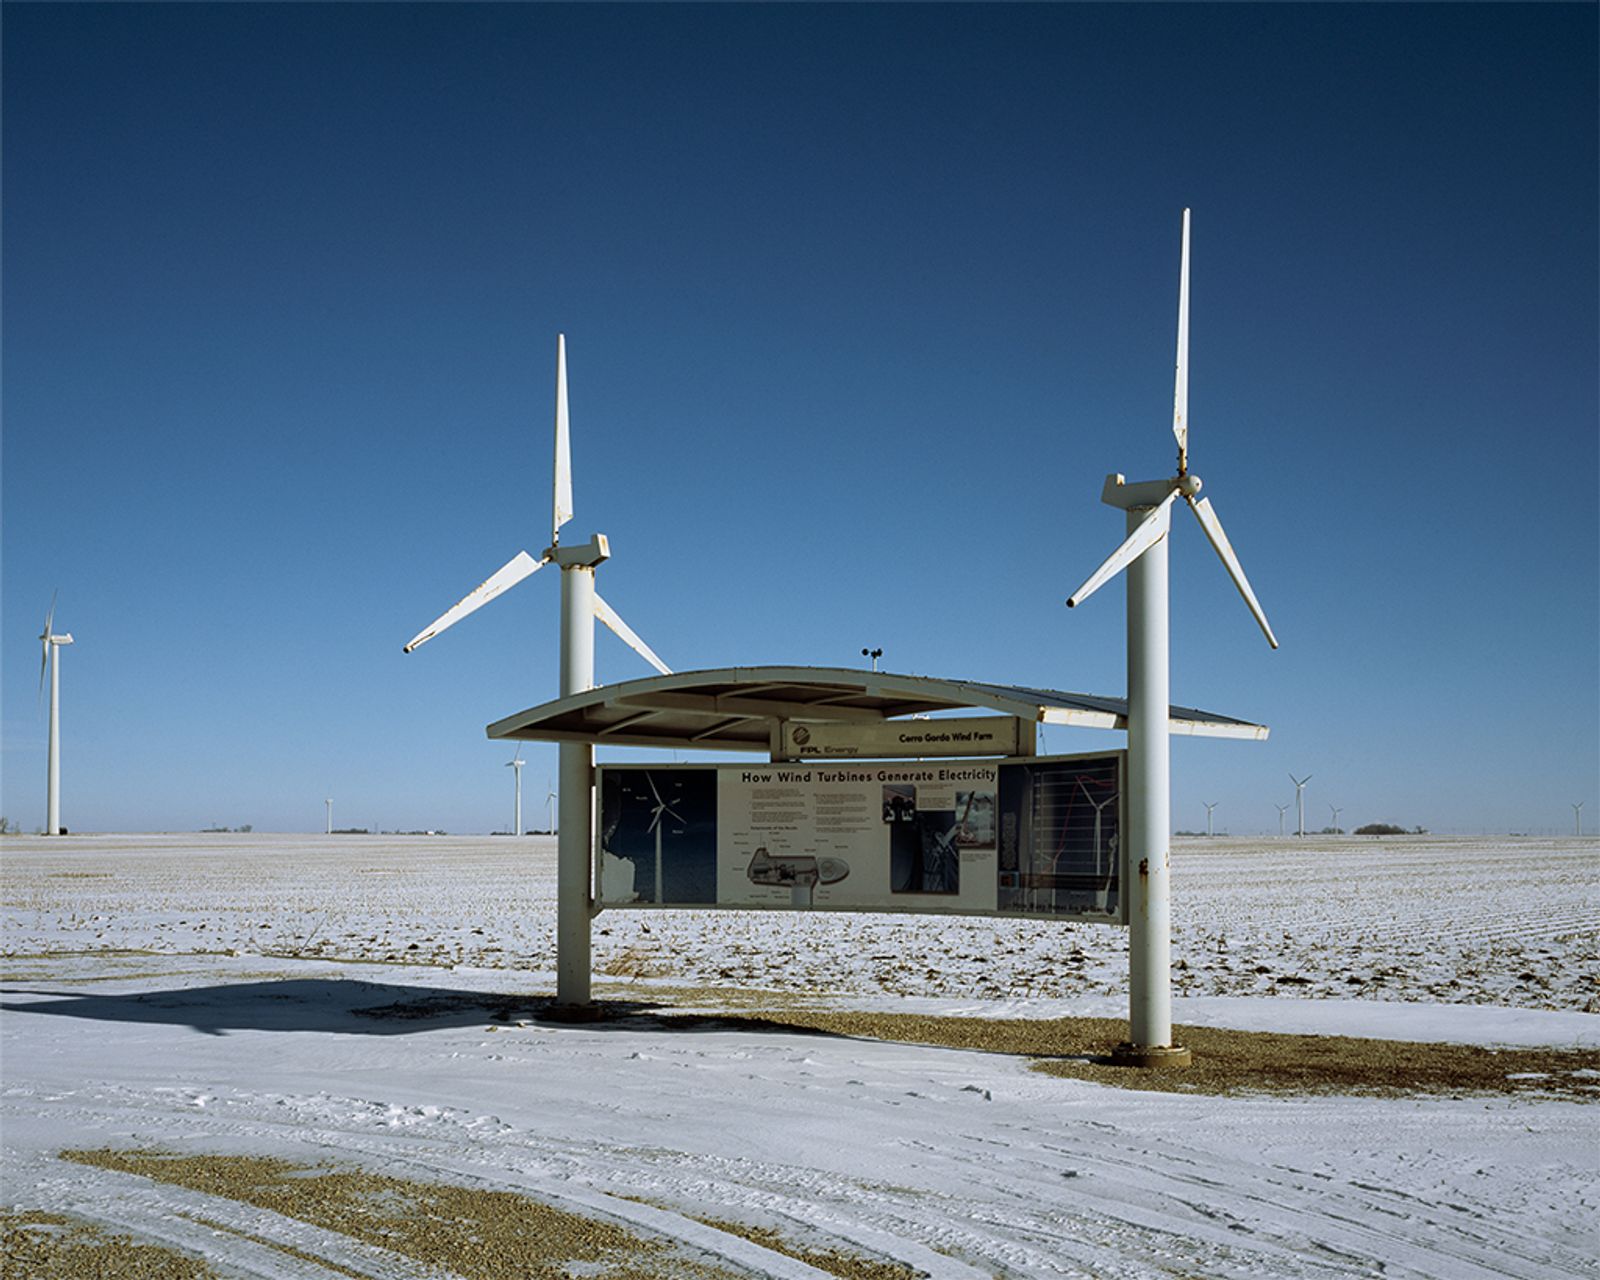 © Bryan Steiff - Information Kiosk, Cerro Gordo Wind Farm, Ventura, Iowa, 2013